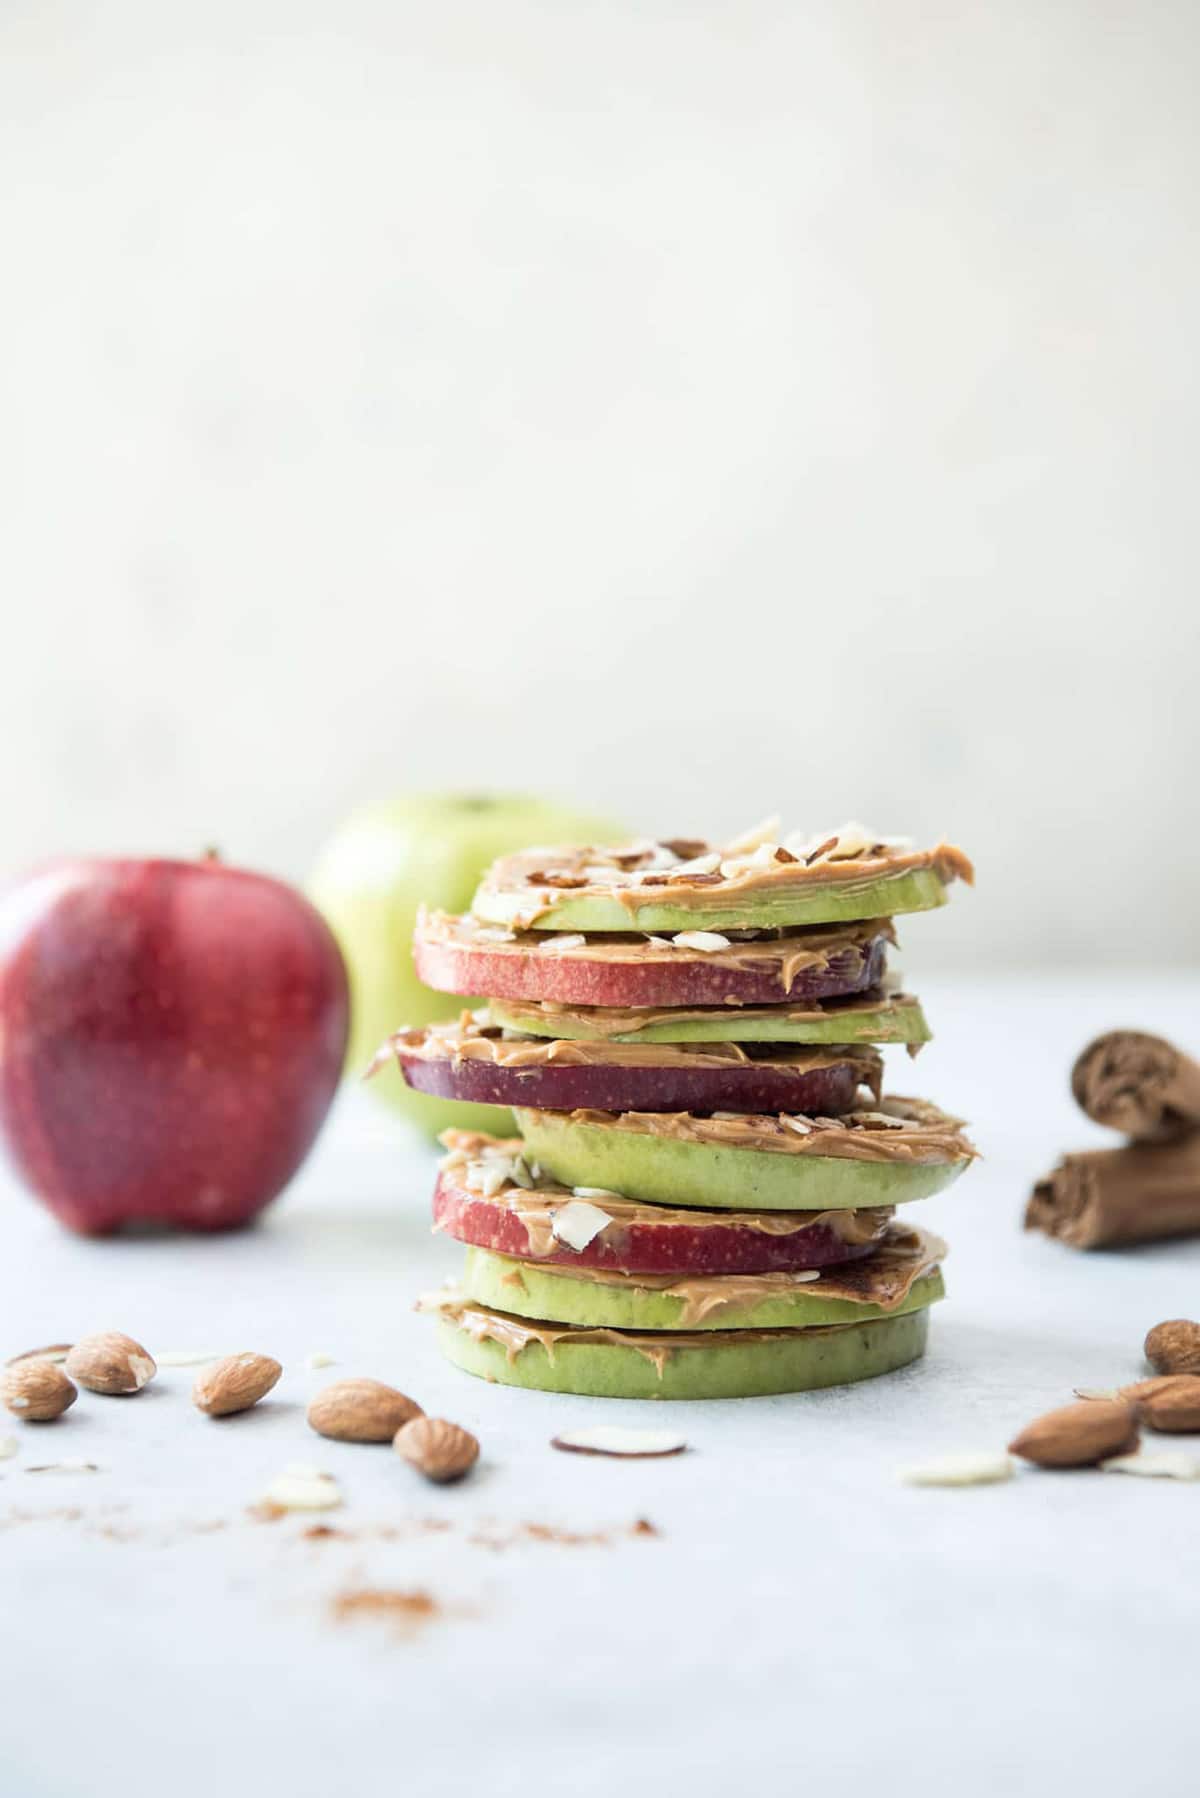 Gluten Free Snack Ideas - Cinnamon Apple Rounds with Peanut Butter